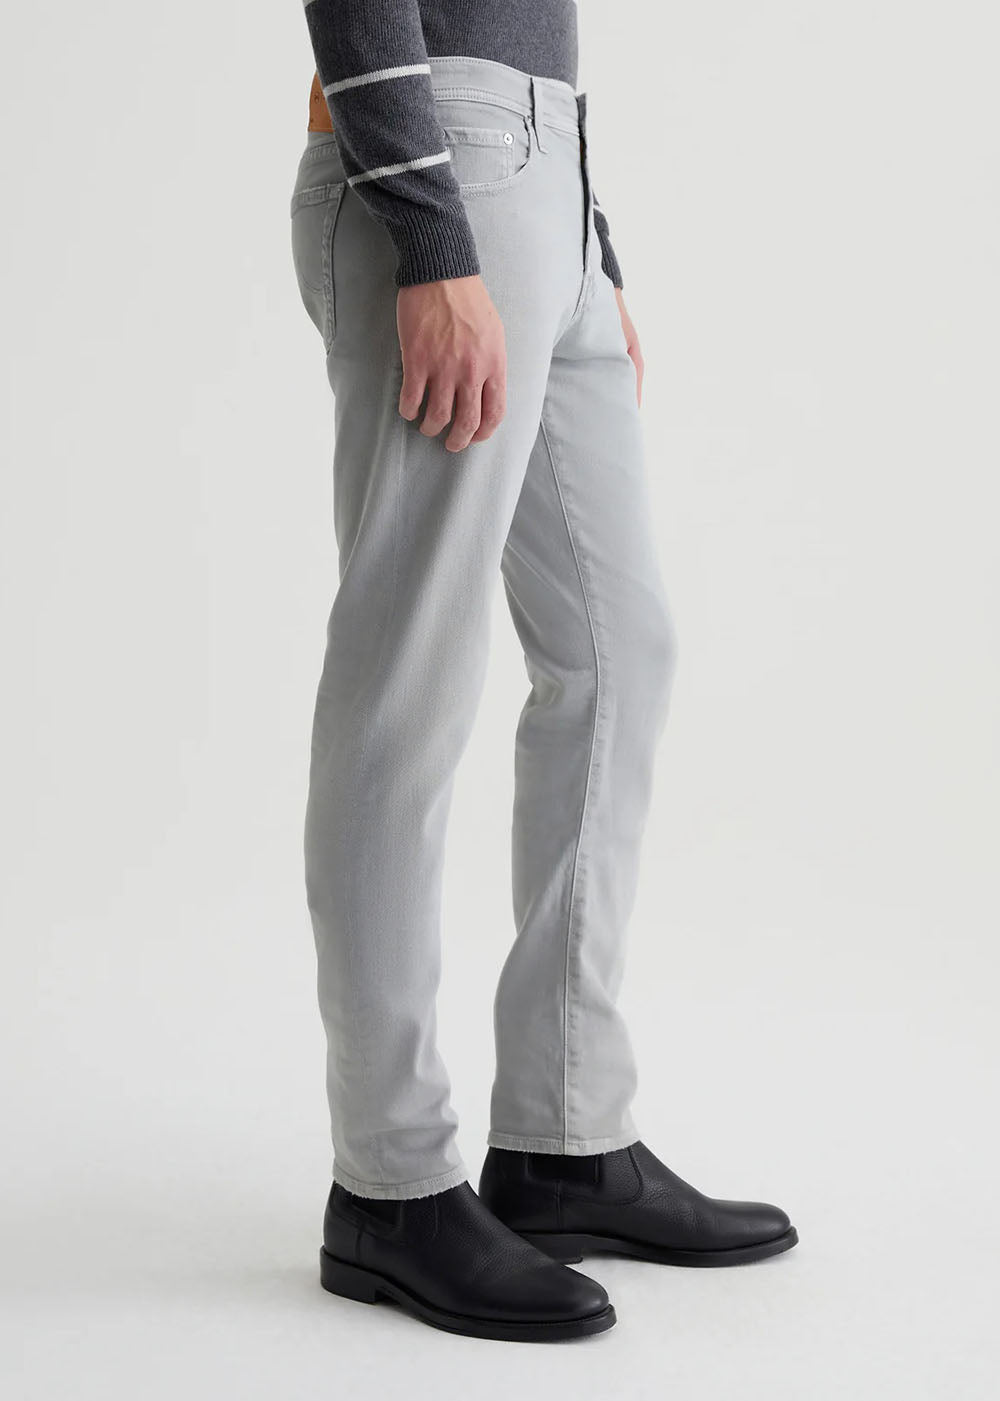 Tellis Modern Slim Jean - 7 YEARS SULFUR AERO GREY - AG Jeans Canada - Danali - 1783HYD07YAER